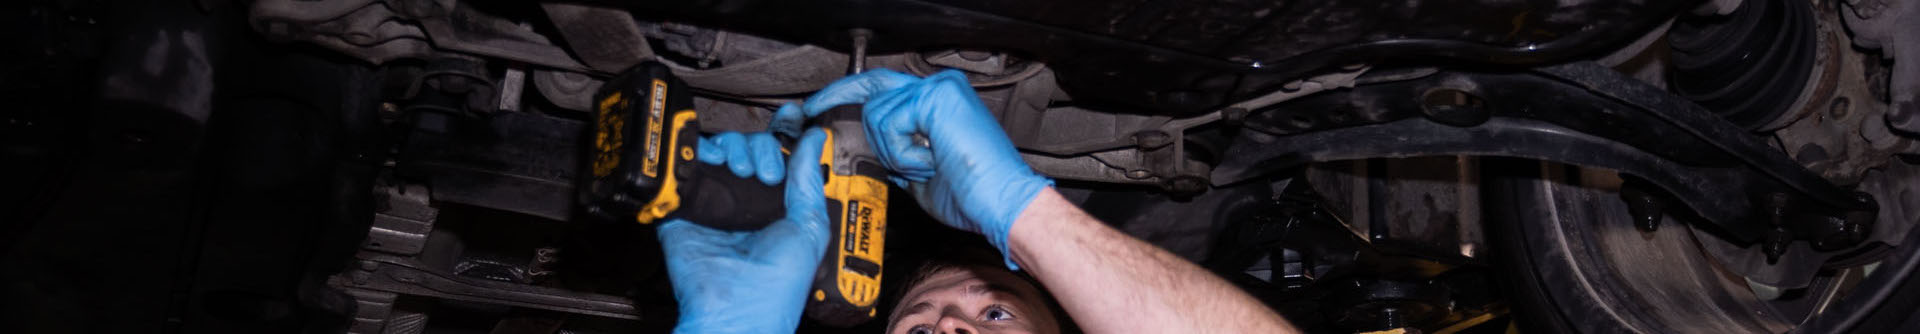 https://autotechrecruit.co.uk/wp-content/uploads/2019/07/Autotech-Recruit-Technician-checking-tyre-depth.jpg